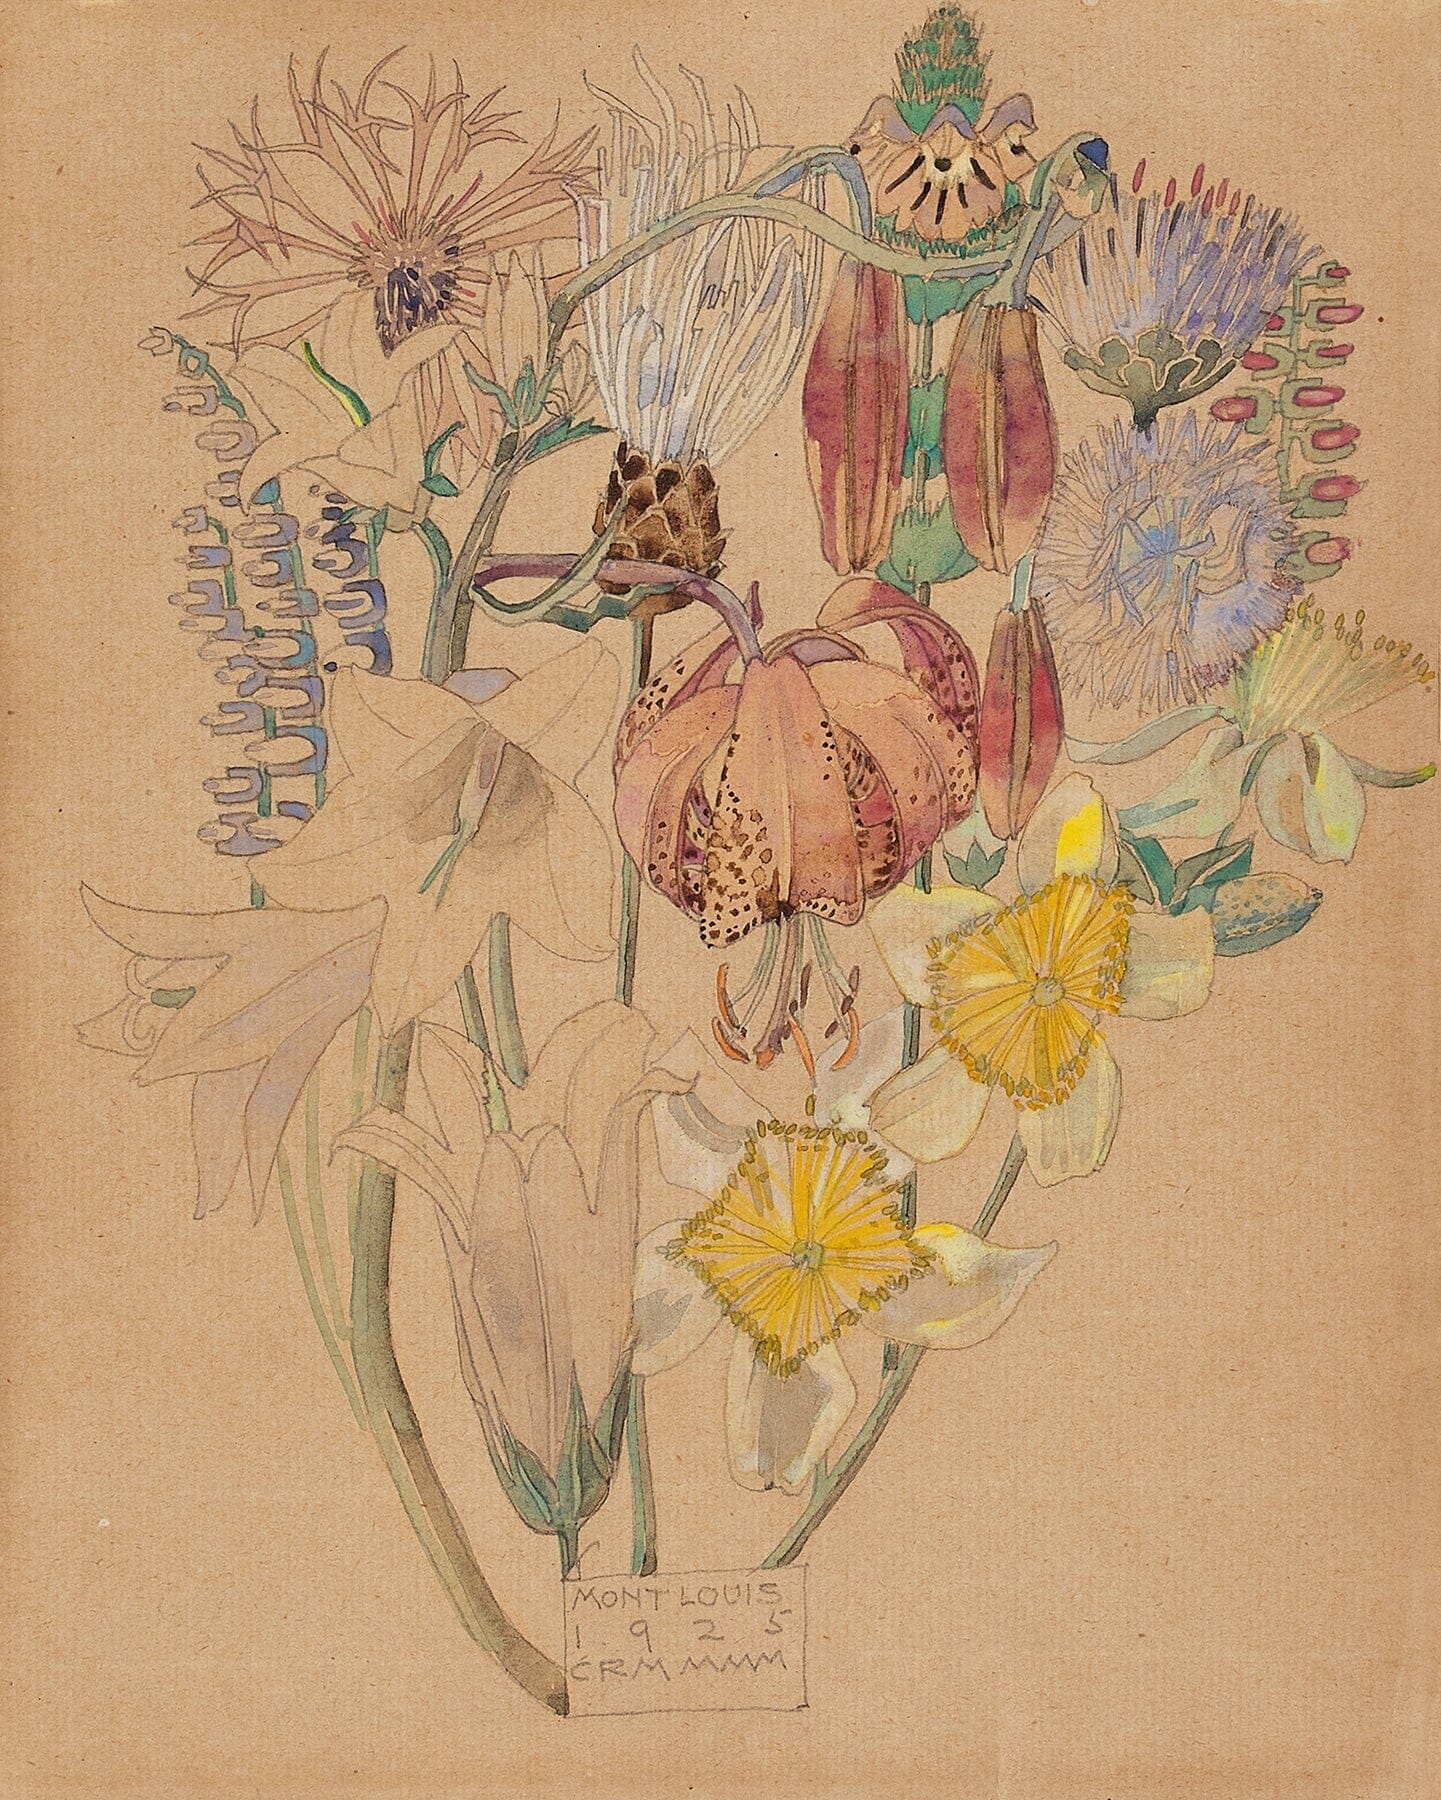 Mont Louis flower study (1920s) | Bathroom wall art print | Charles Rennie Mackintosh Posters, Prints, & Visual Artwork The Trumpet Shop Vintage Prints   